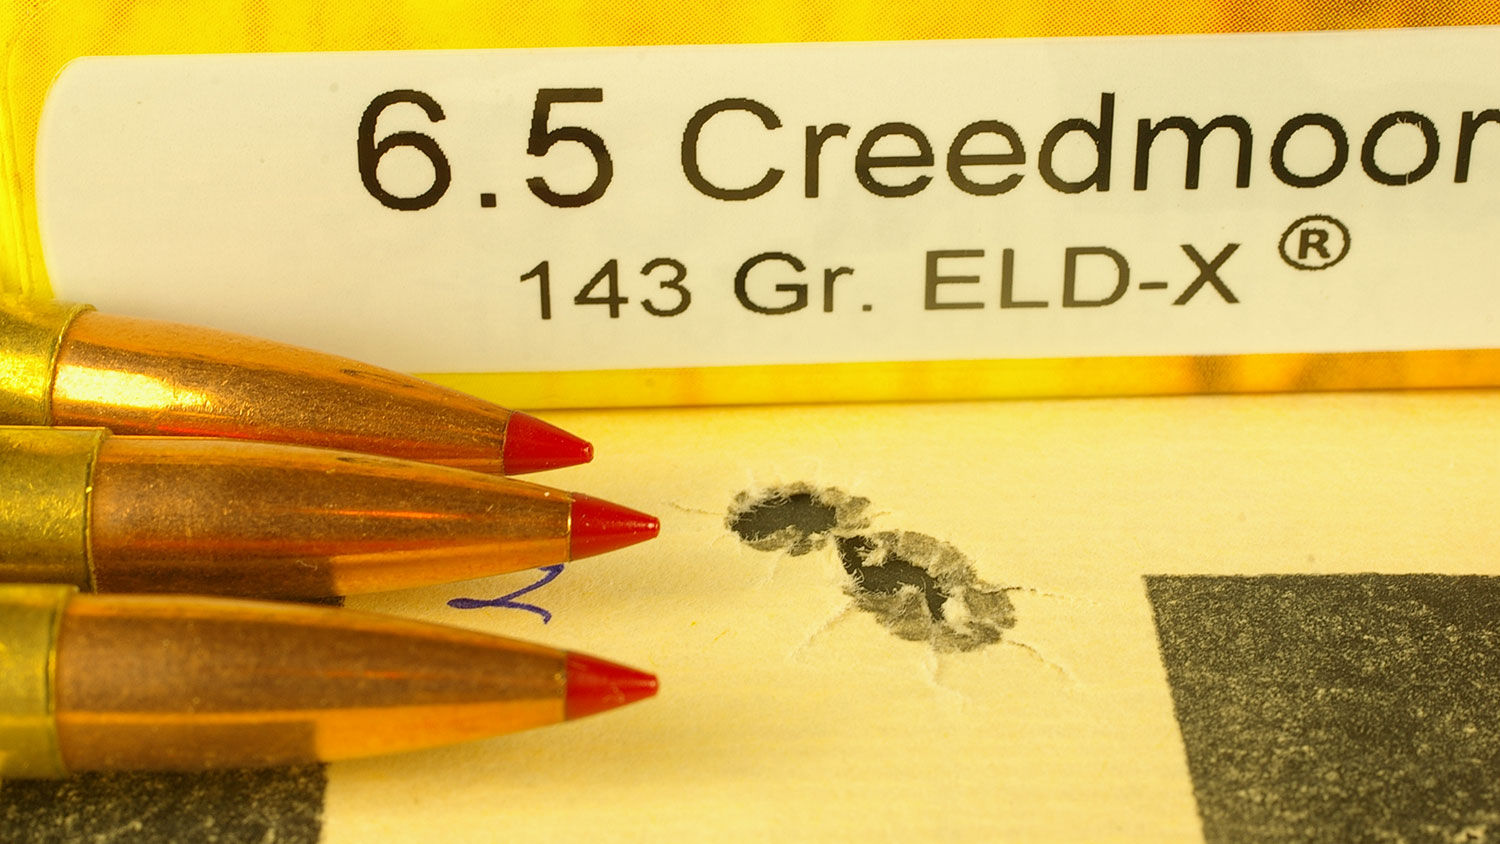 Black Hills Gold 6.5 Creedmoor cartridges